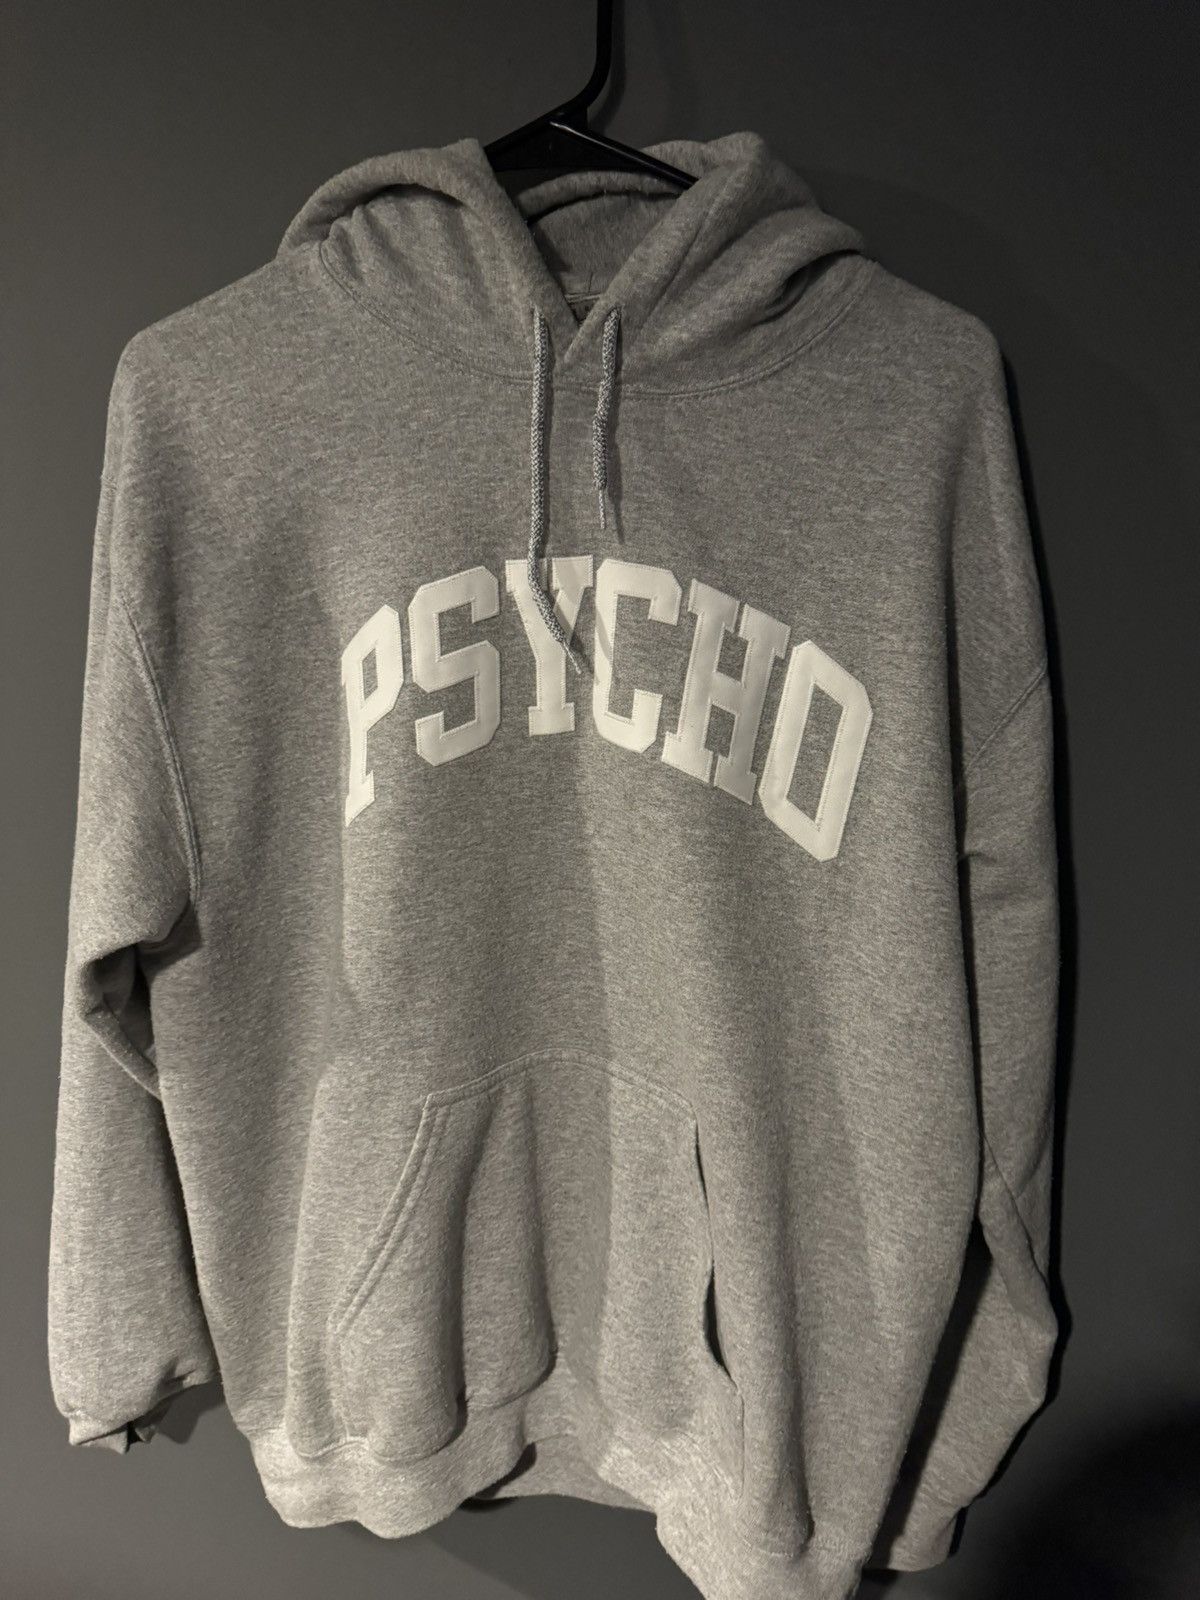 Pre-owned Undercover Psycho Hoodie In Grey